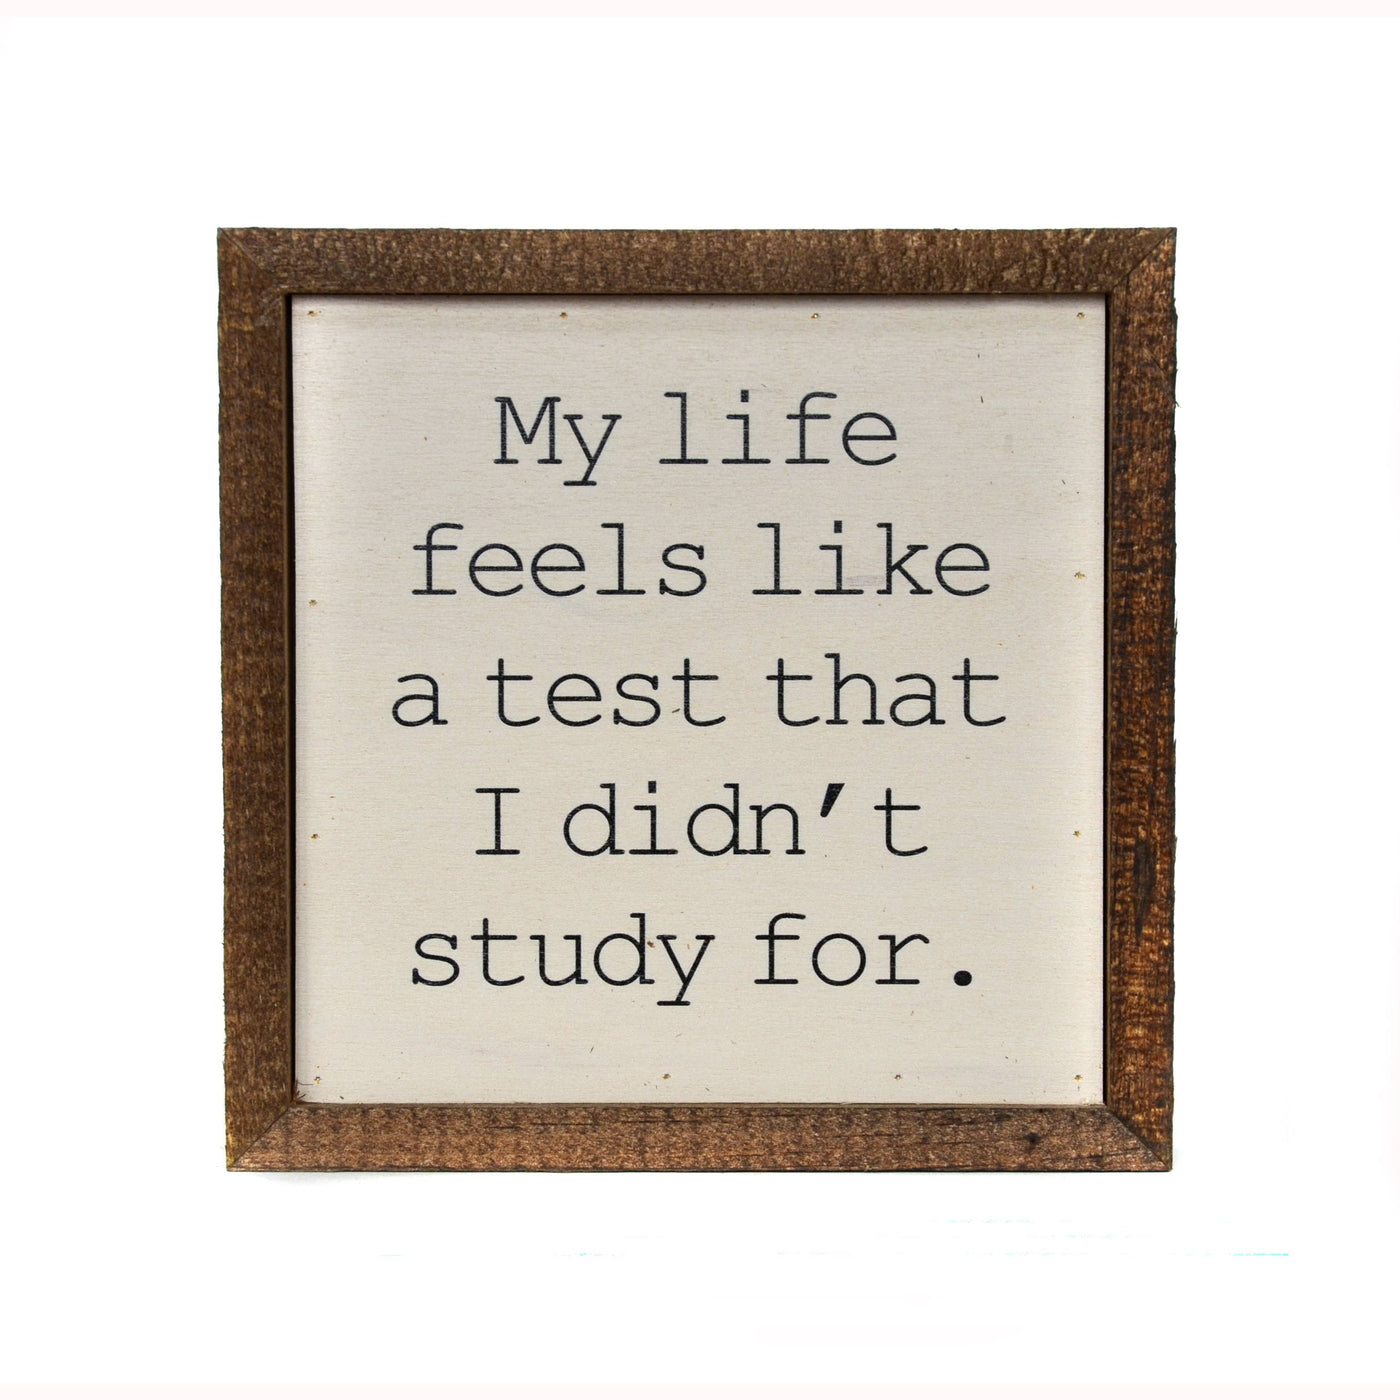 My life feels like a test...